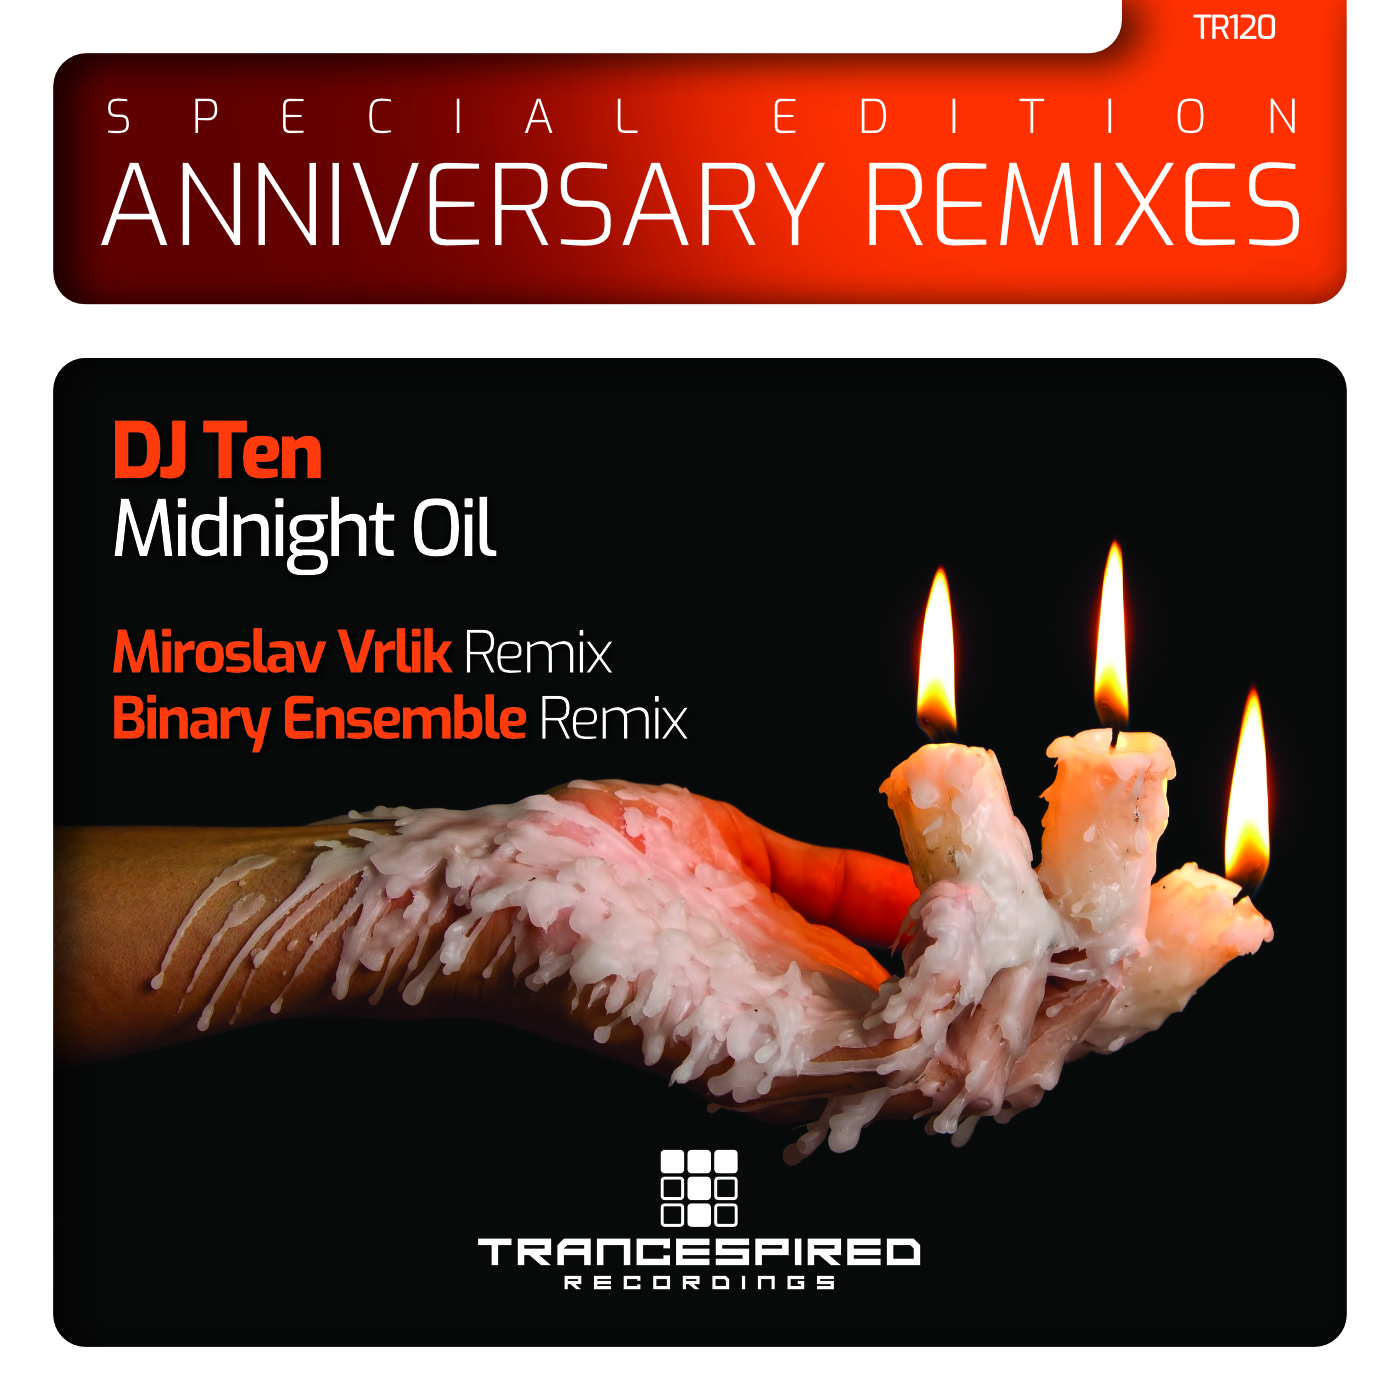 DJ Ten presents Midnight Oil on Trancespired Recordings